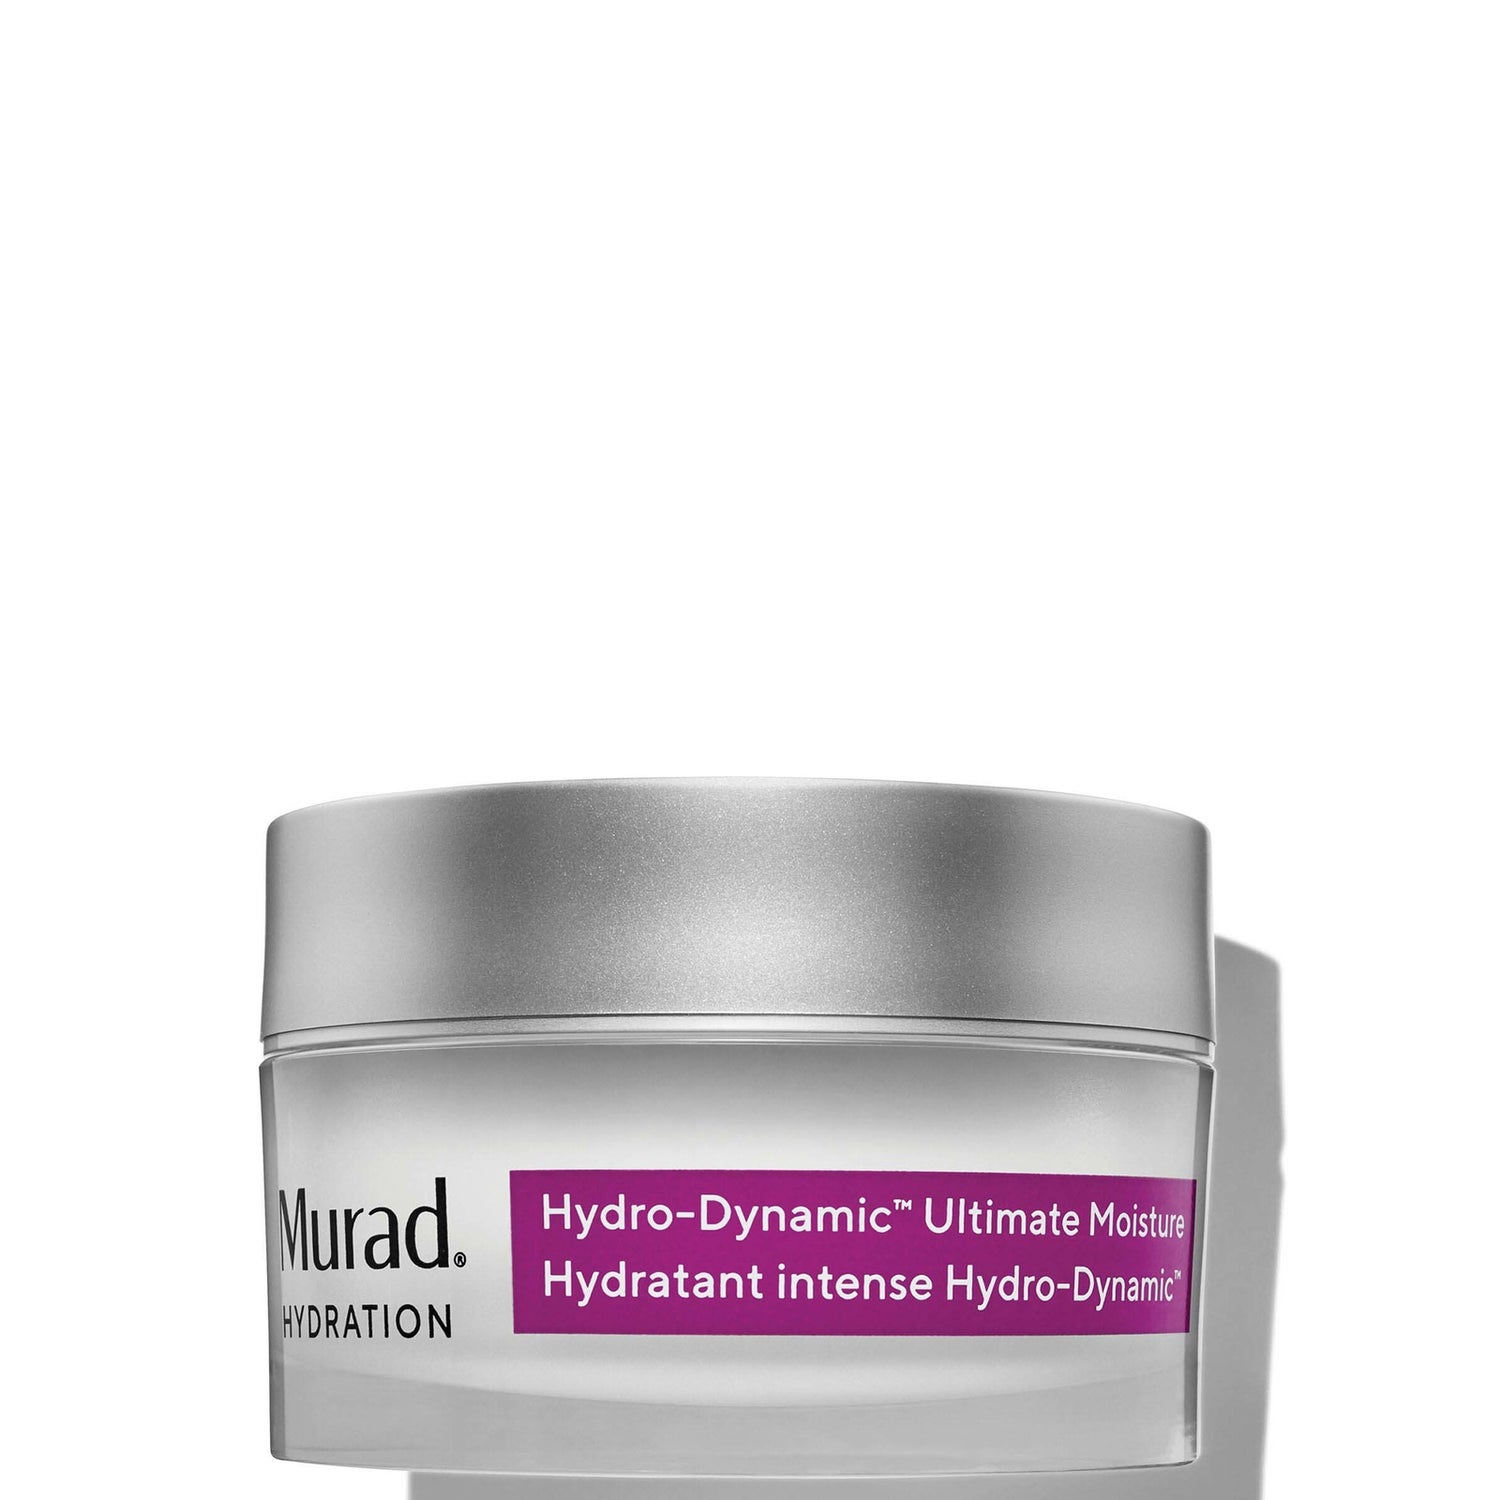 Murad Hydro-Dynamic Ultimate Moisture 50ml